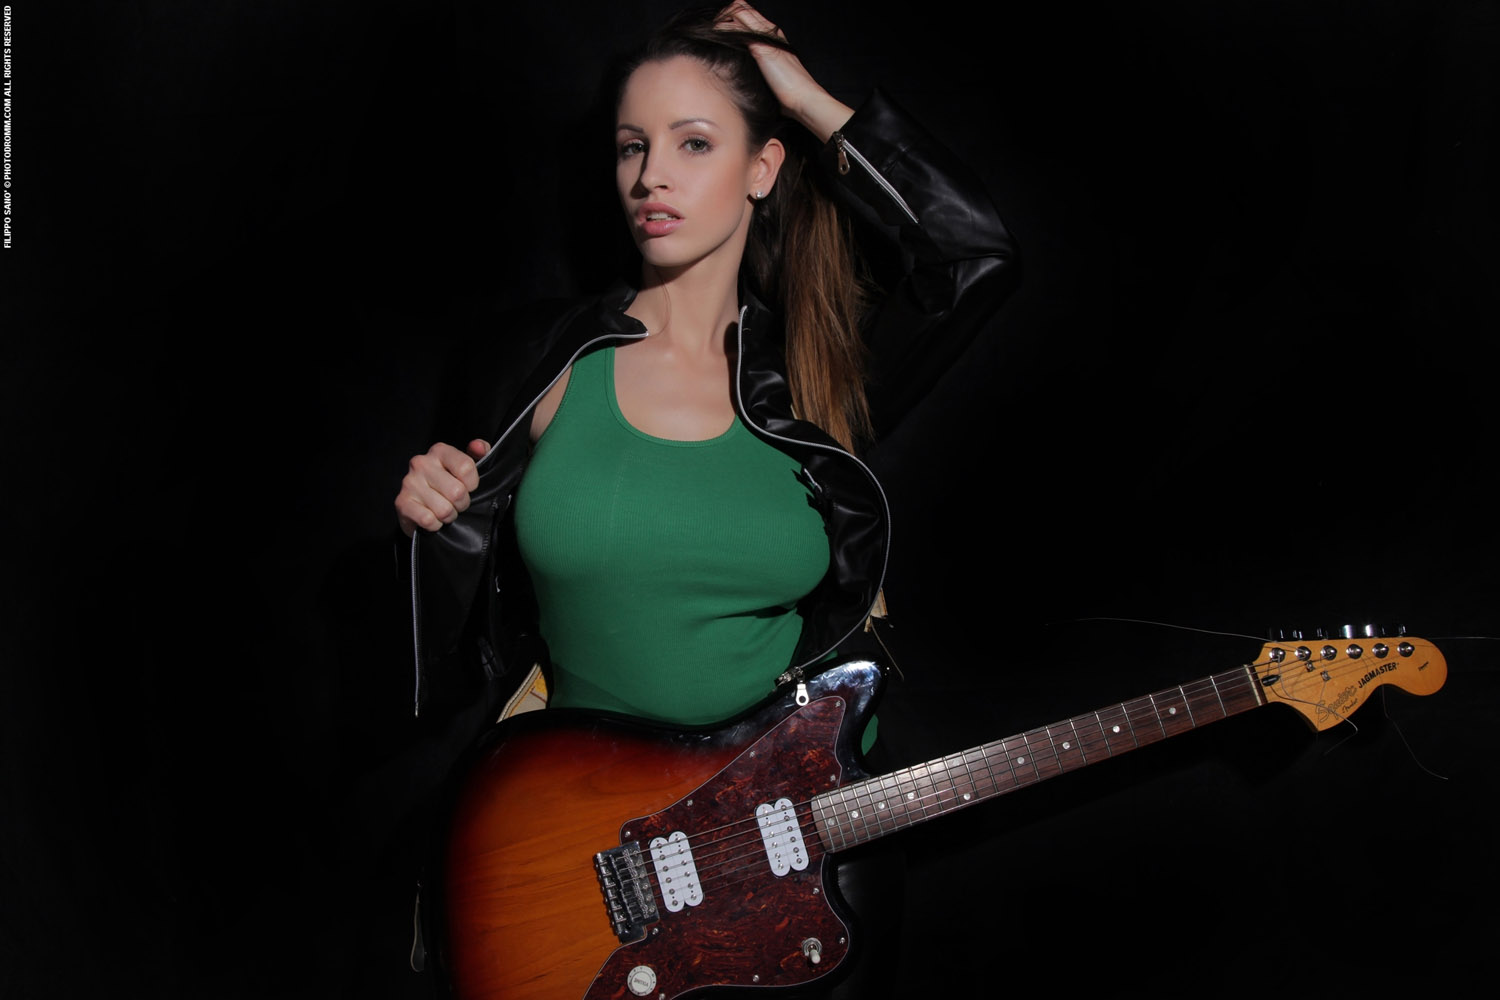 Luciana Guitar Player Photodromm